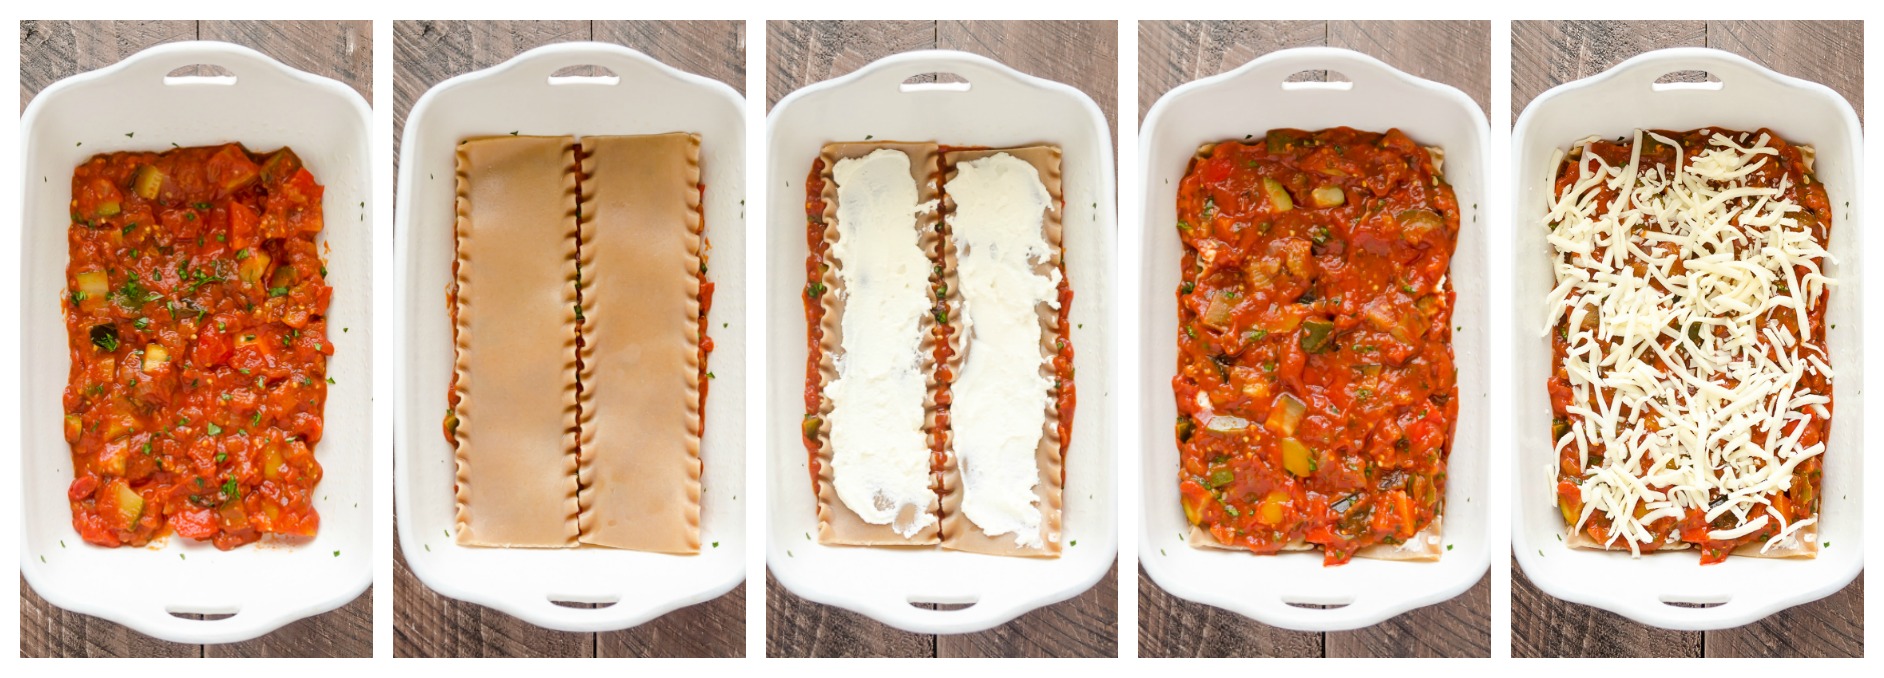 Ratatouille Lasagna process collage